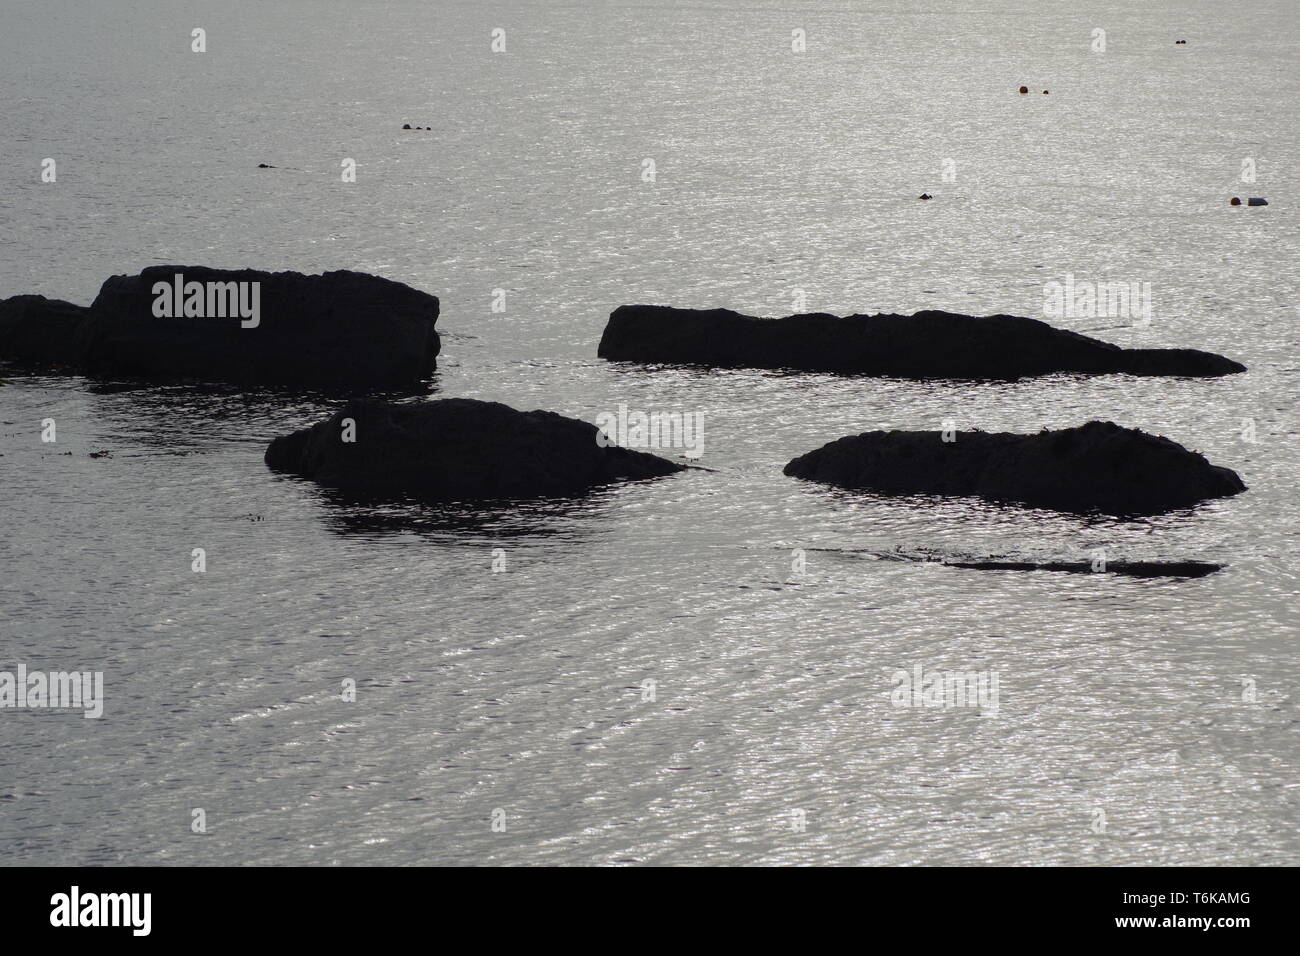 Fond naturel de quatre blocs qui se profile à l'aube dans un quartier calme de la mer argentée. Firth of Forth, Crail, Fife, Scotland, UK. Banque D'Images